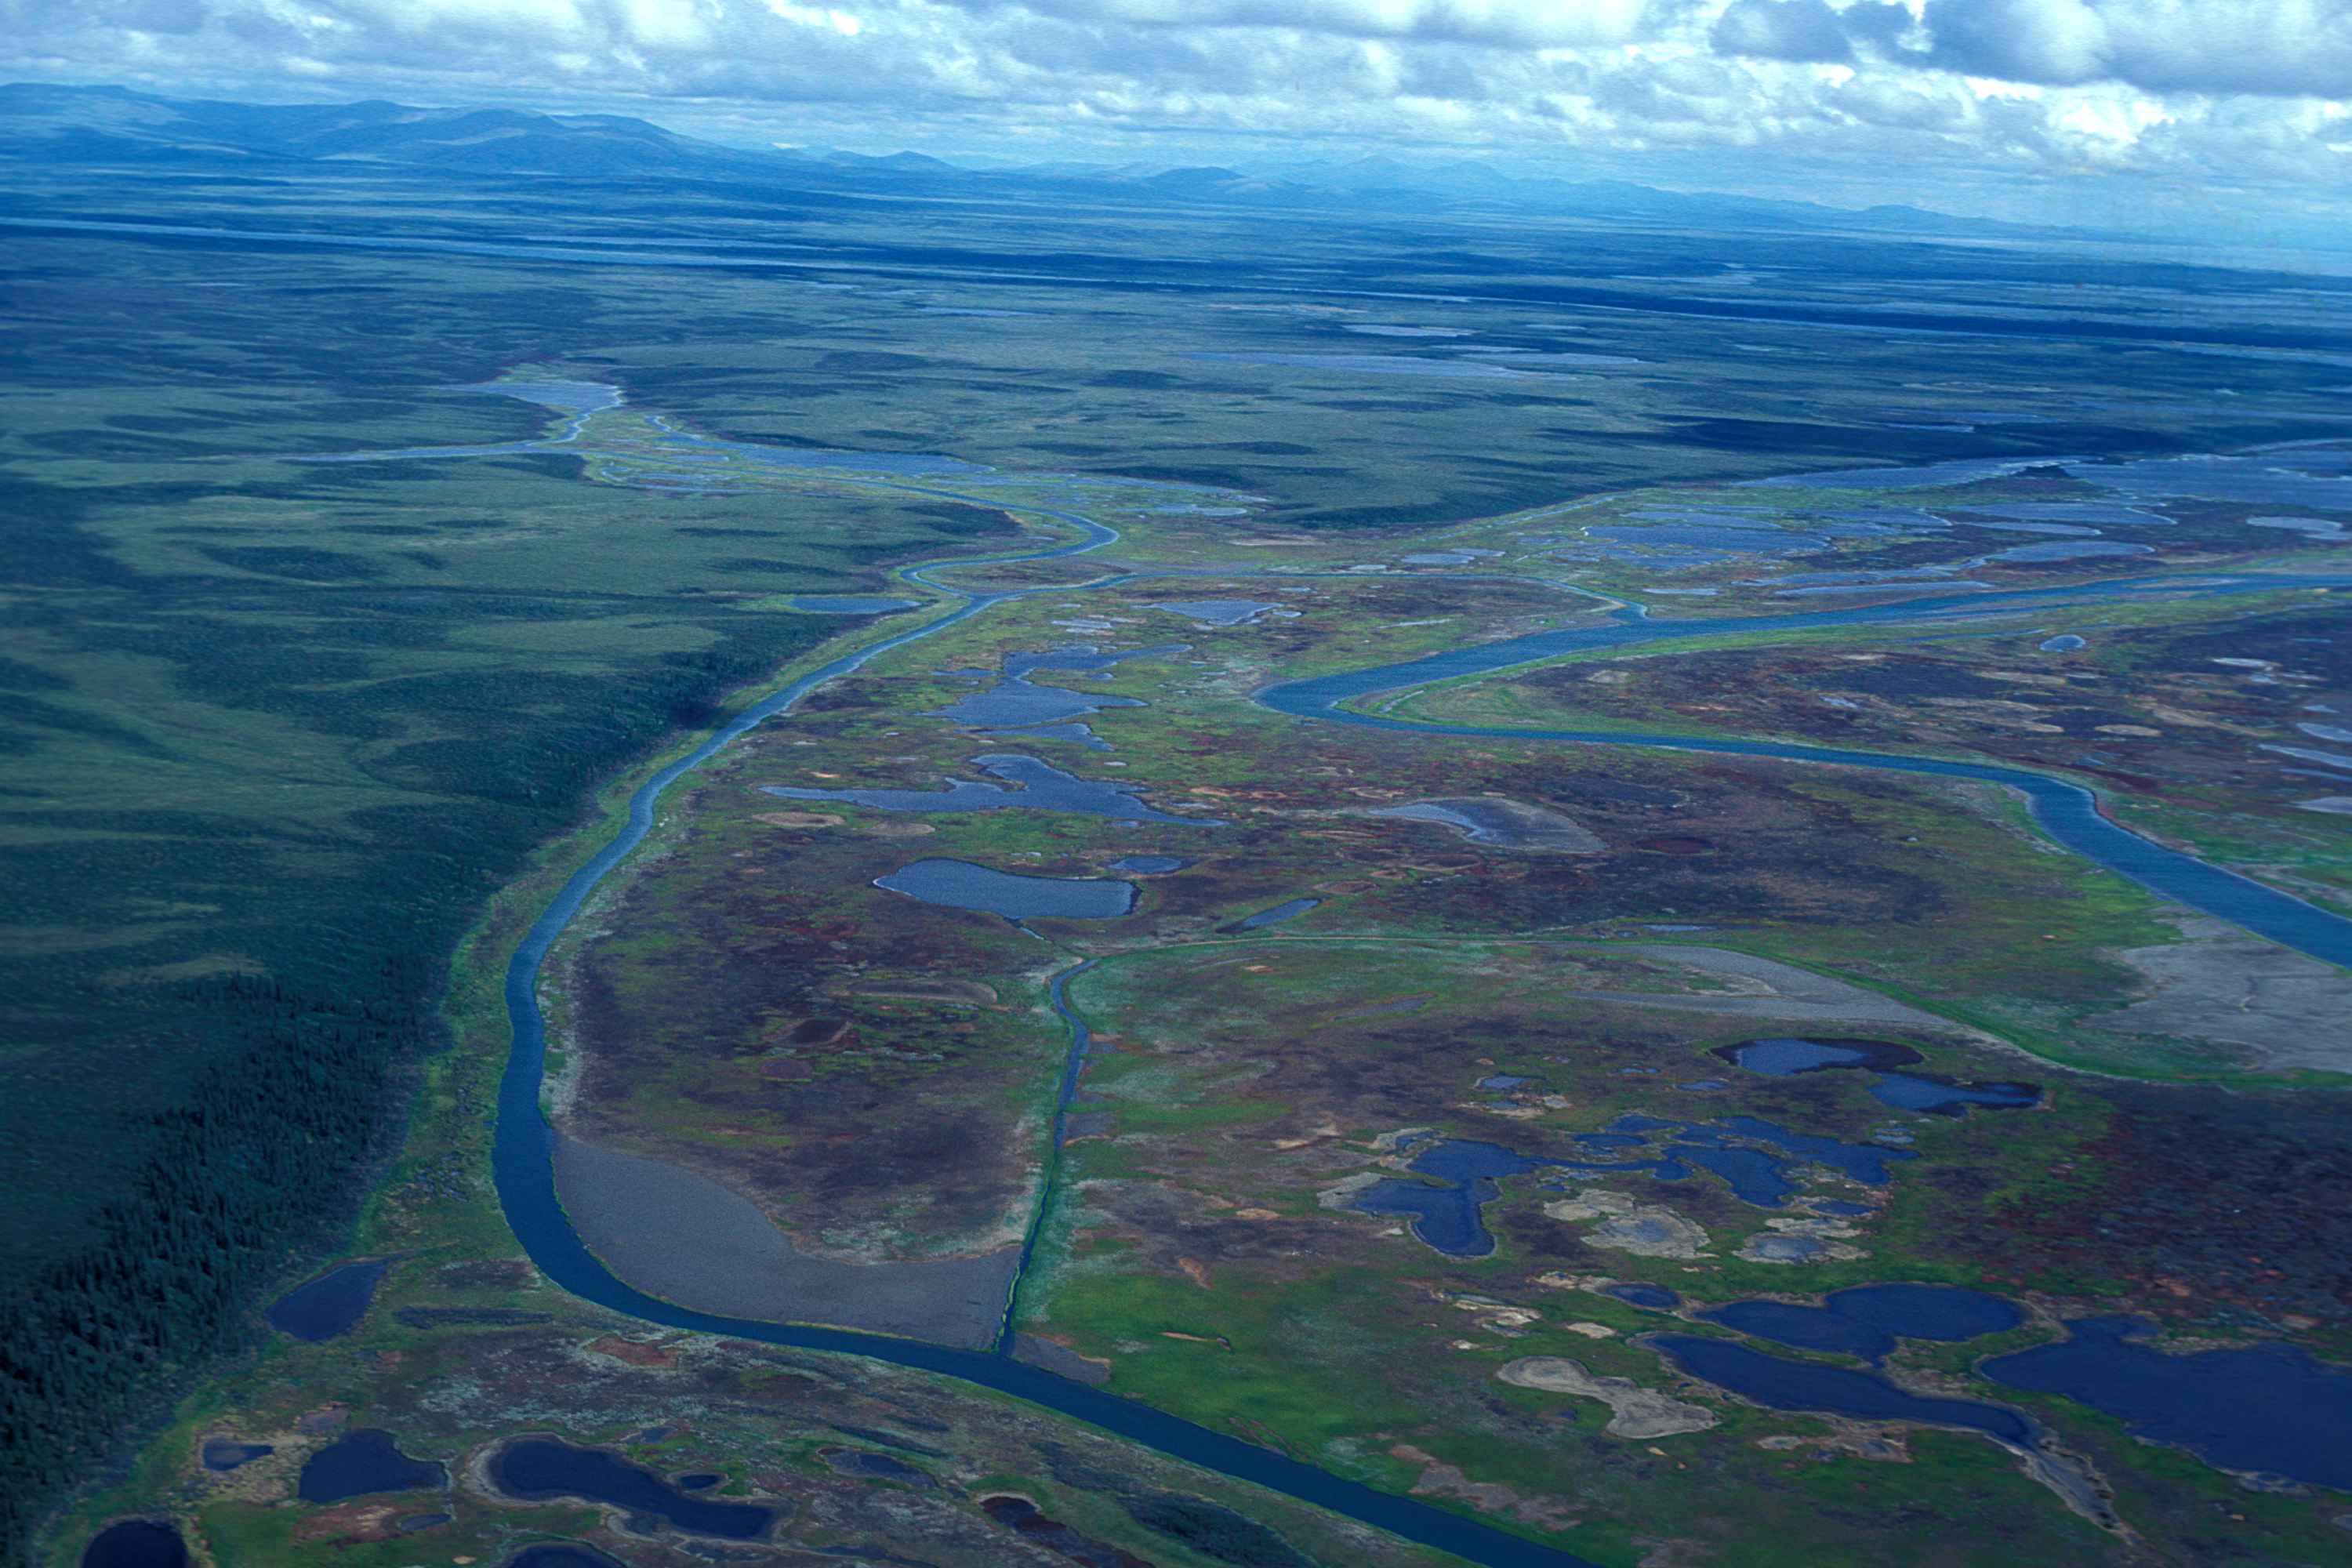 River delta swamp aerial view